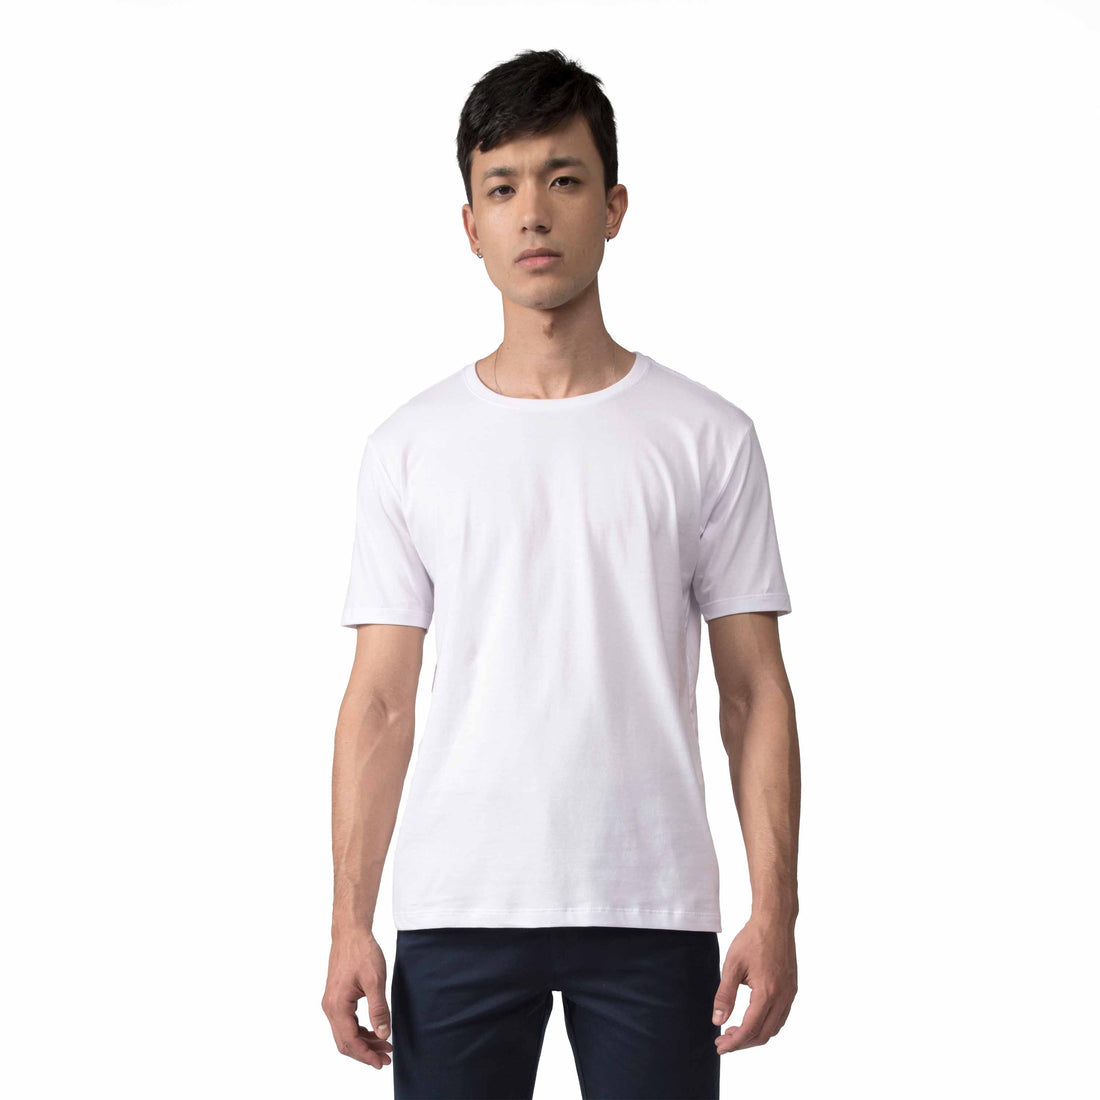 Camiseta Pima Masculina | Life Collection - Branco